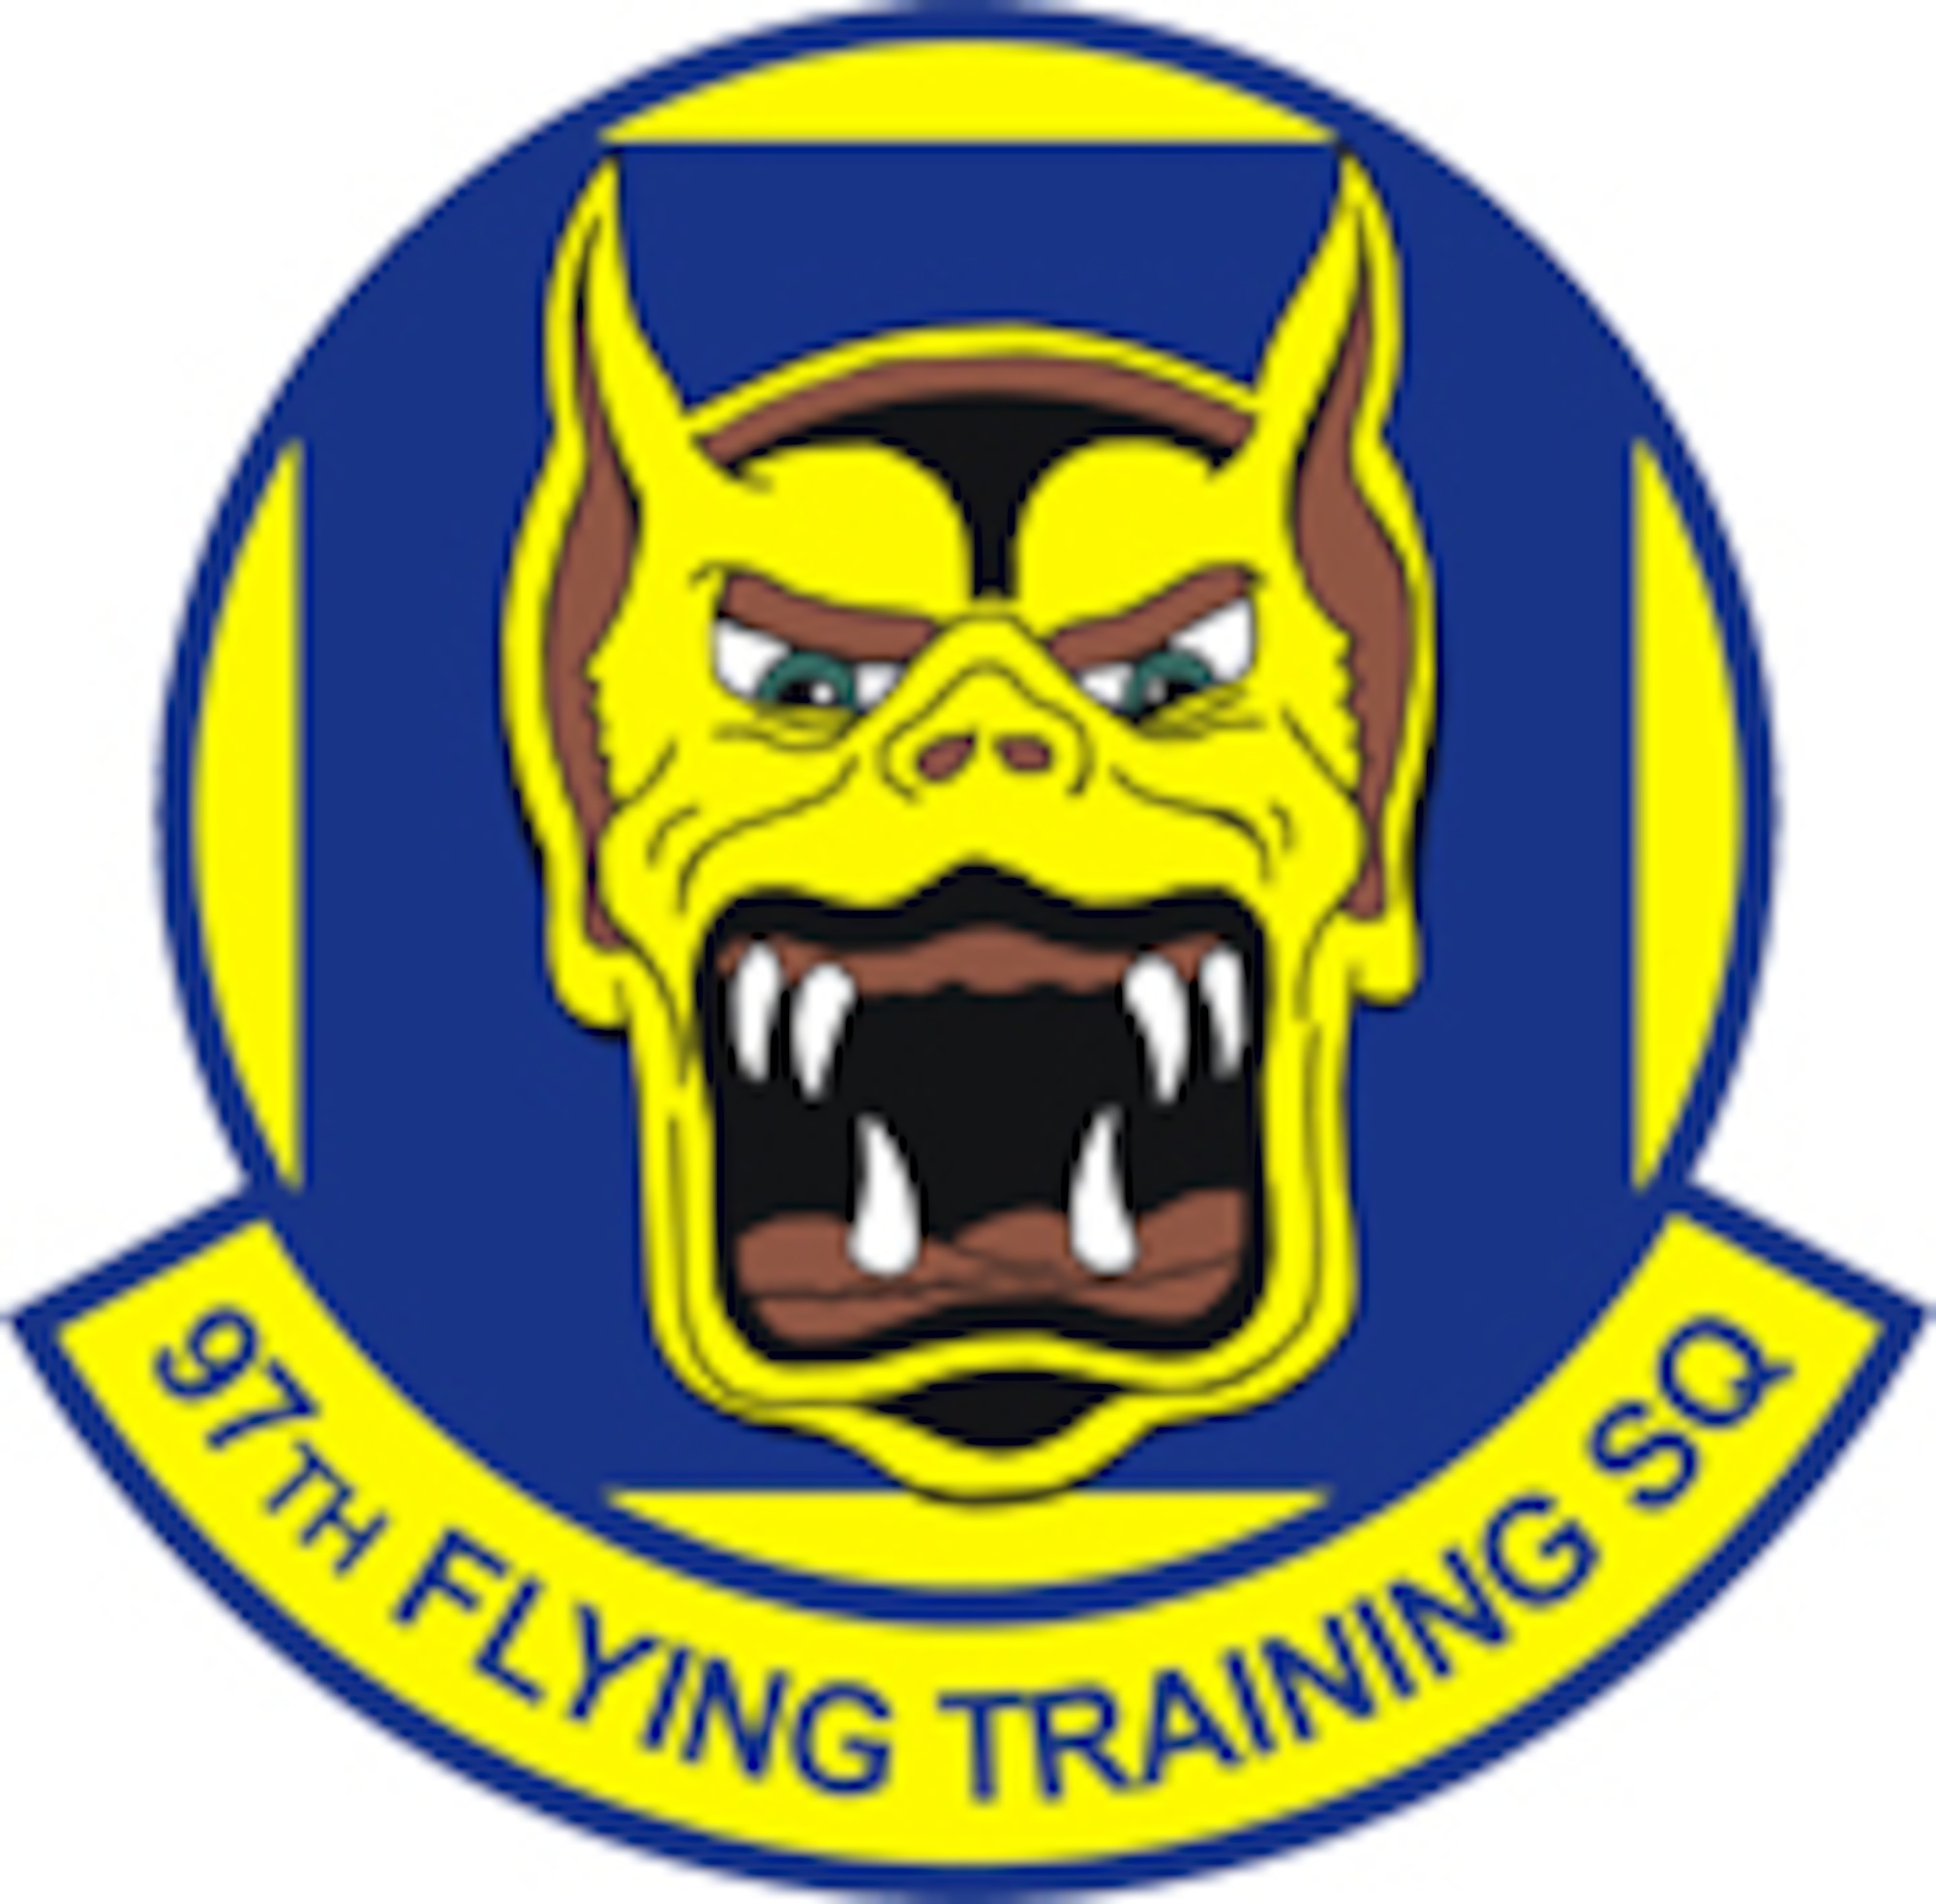 97th Flying Training Squadron